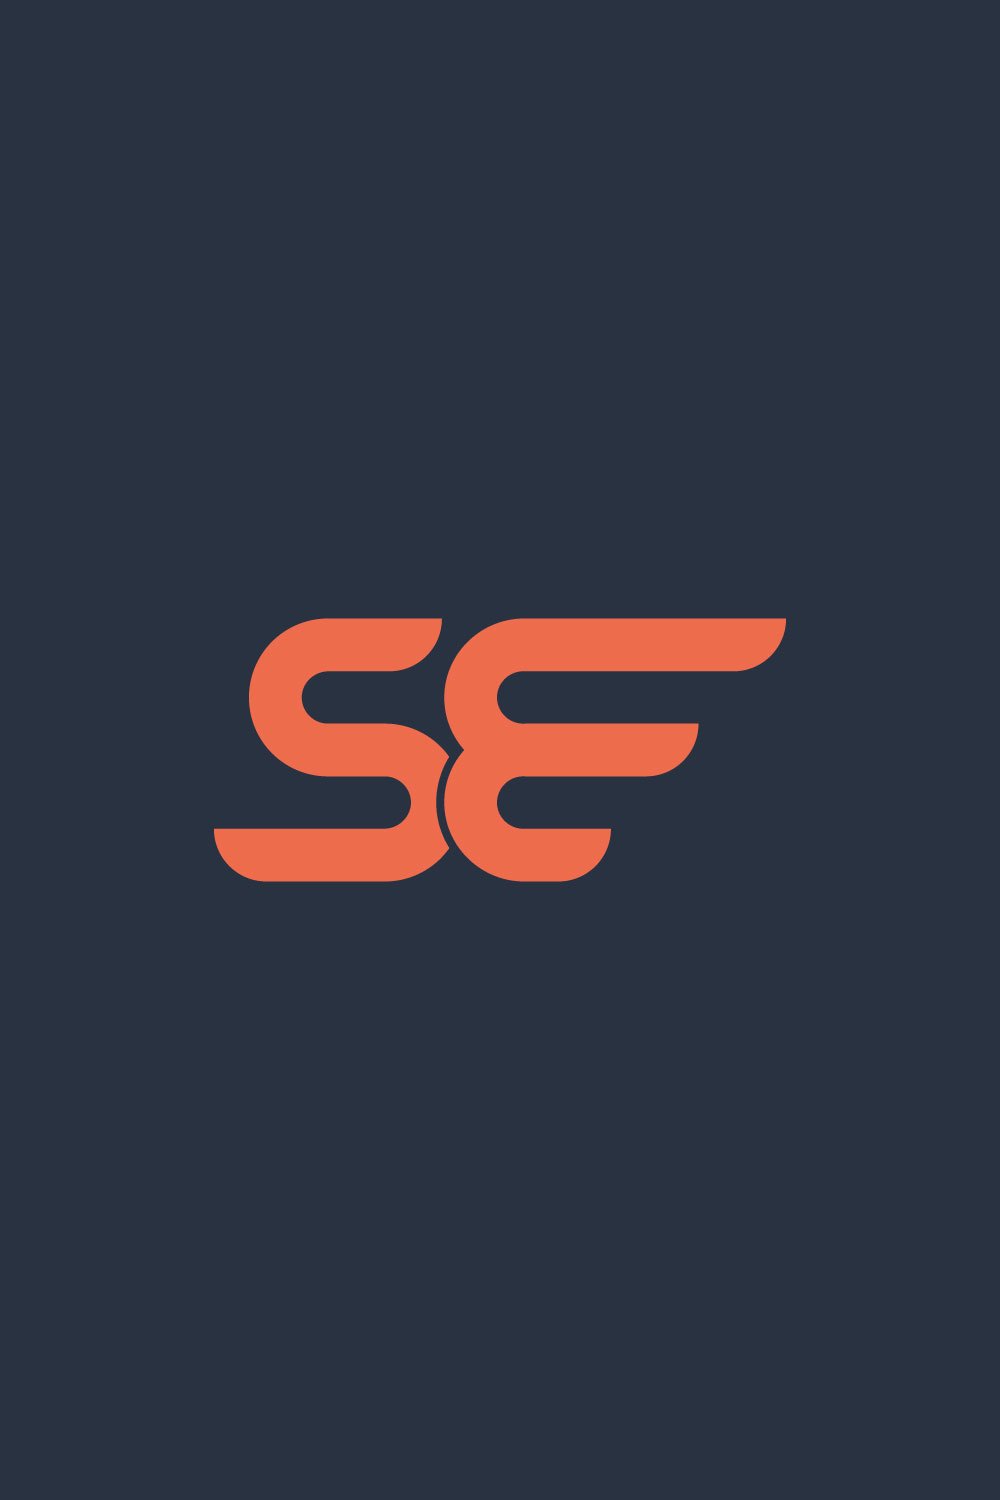 SE letter logo design pinterest preview image.